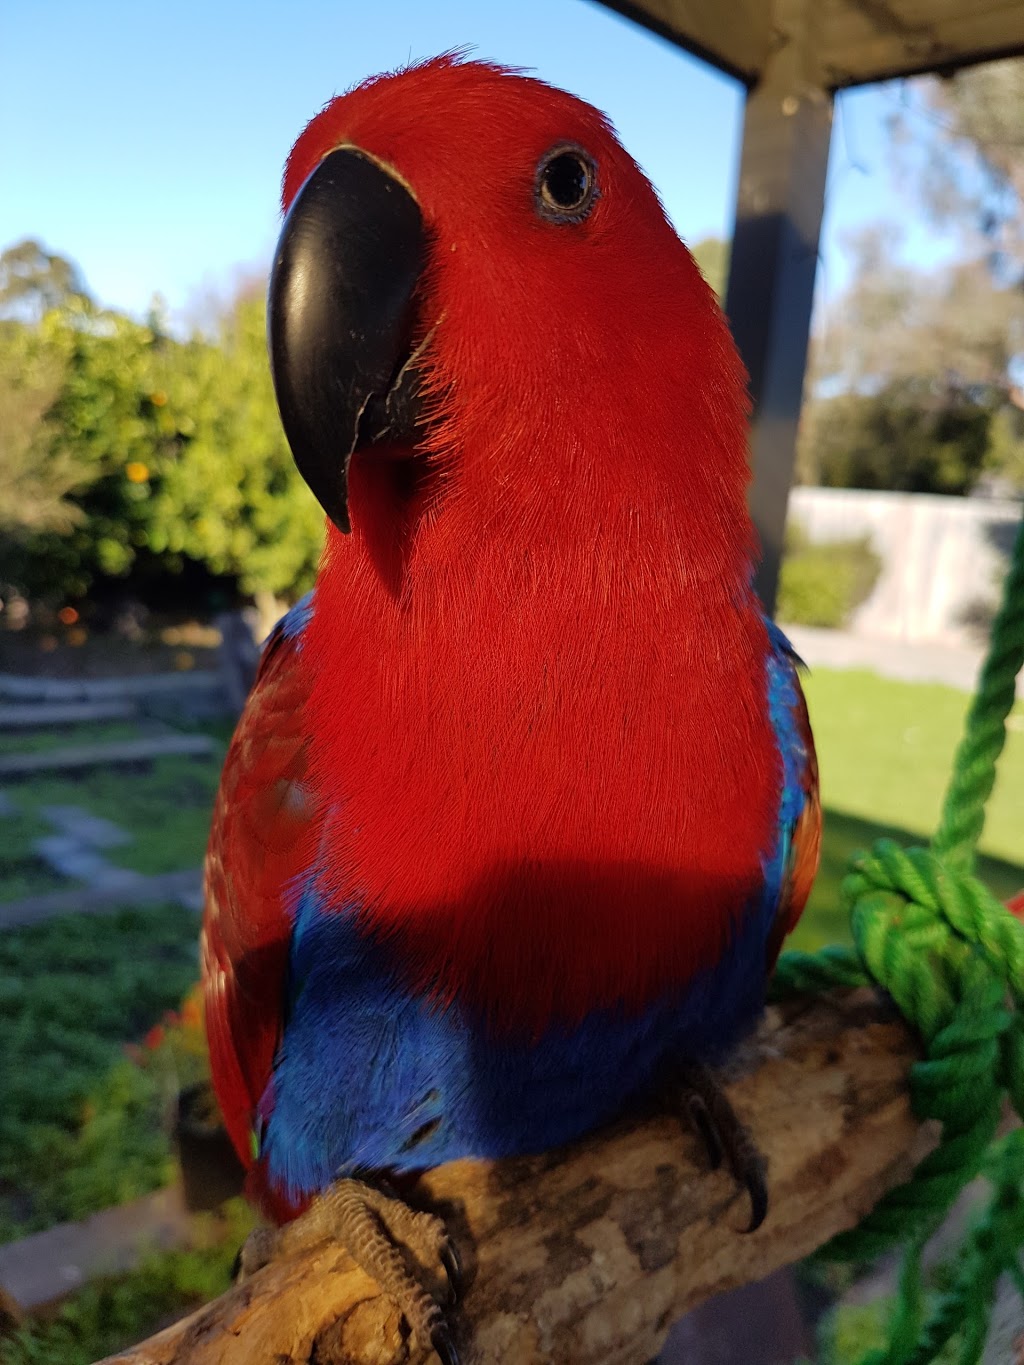 Peninsula Bird World | pet store | 2/7 Rutherford Rd, Seaford VIC 3198, Australia | 0397708772 OR +61 3 9770 8772